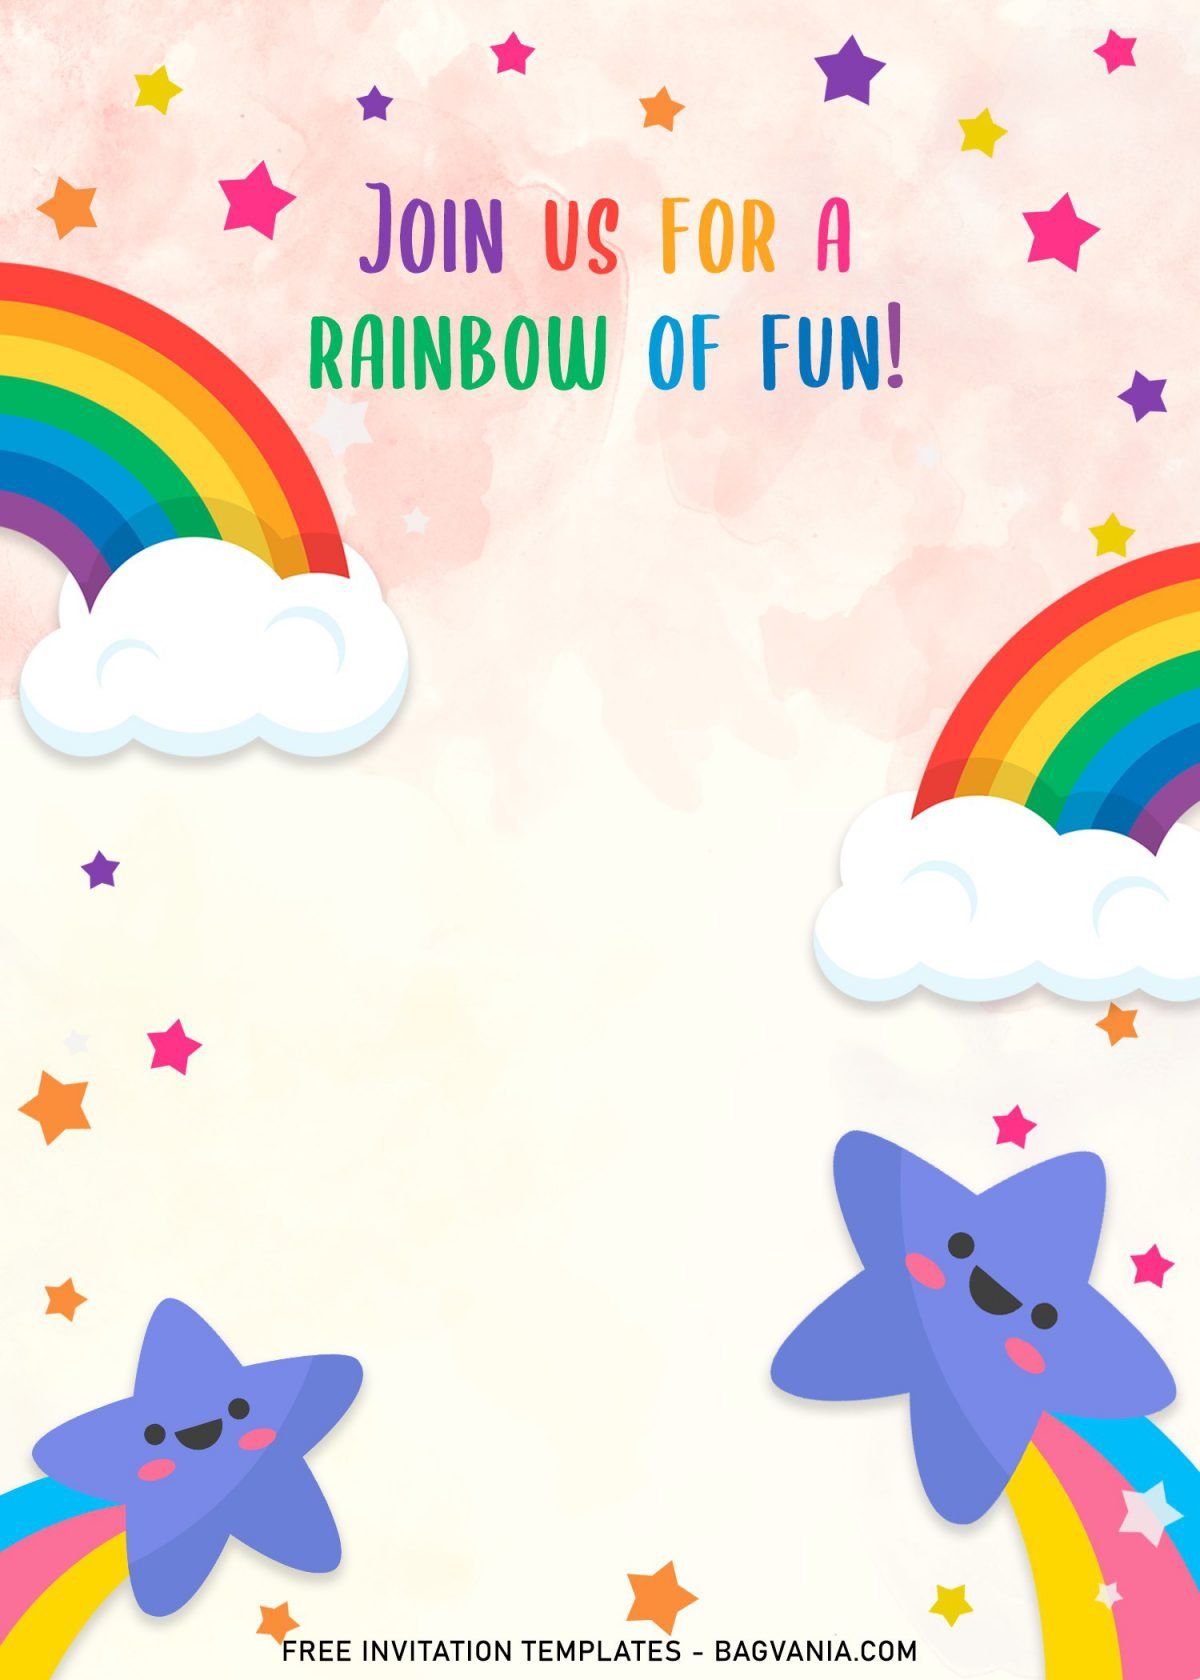 11+ Colorful Rainbow Invitation Card Templates For A Whimsical Birthday